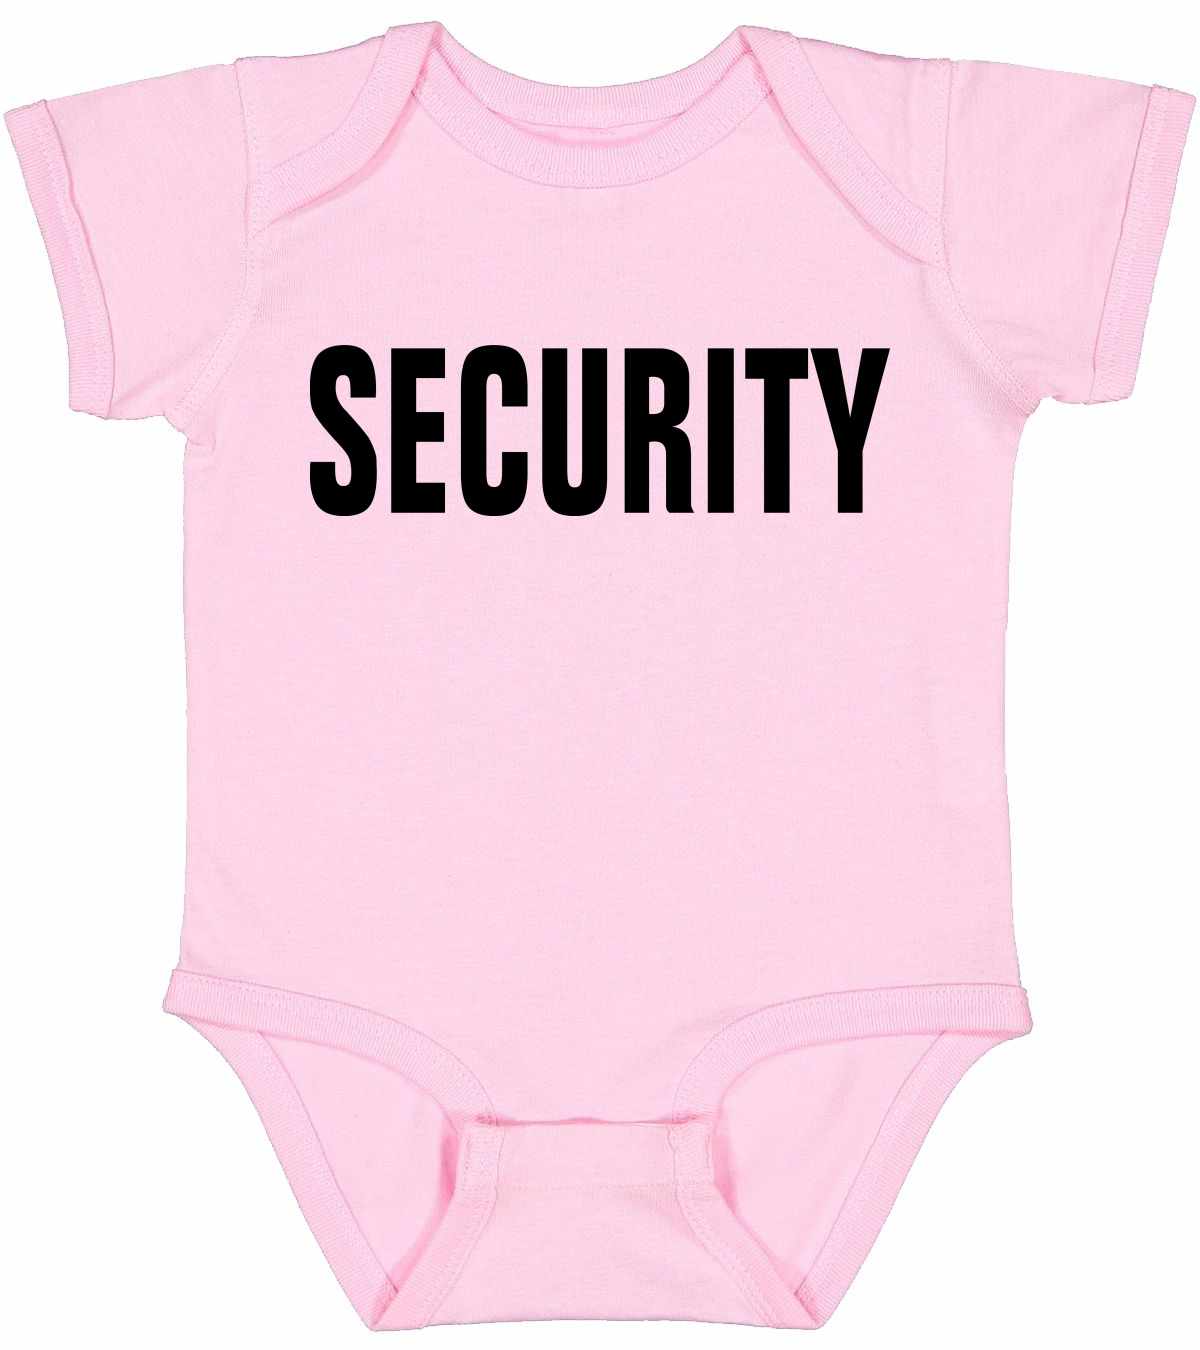 SECURITY on Infant BodySuit